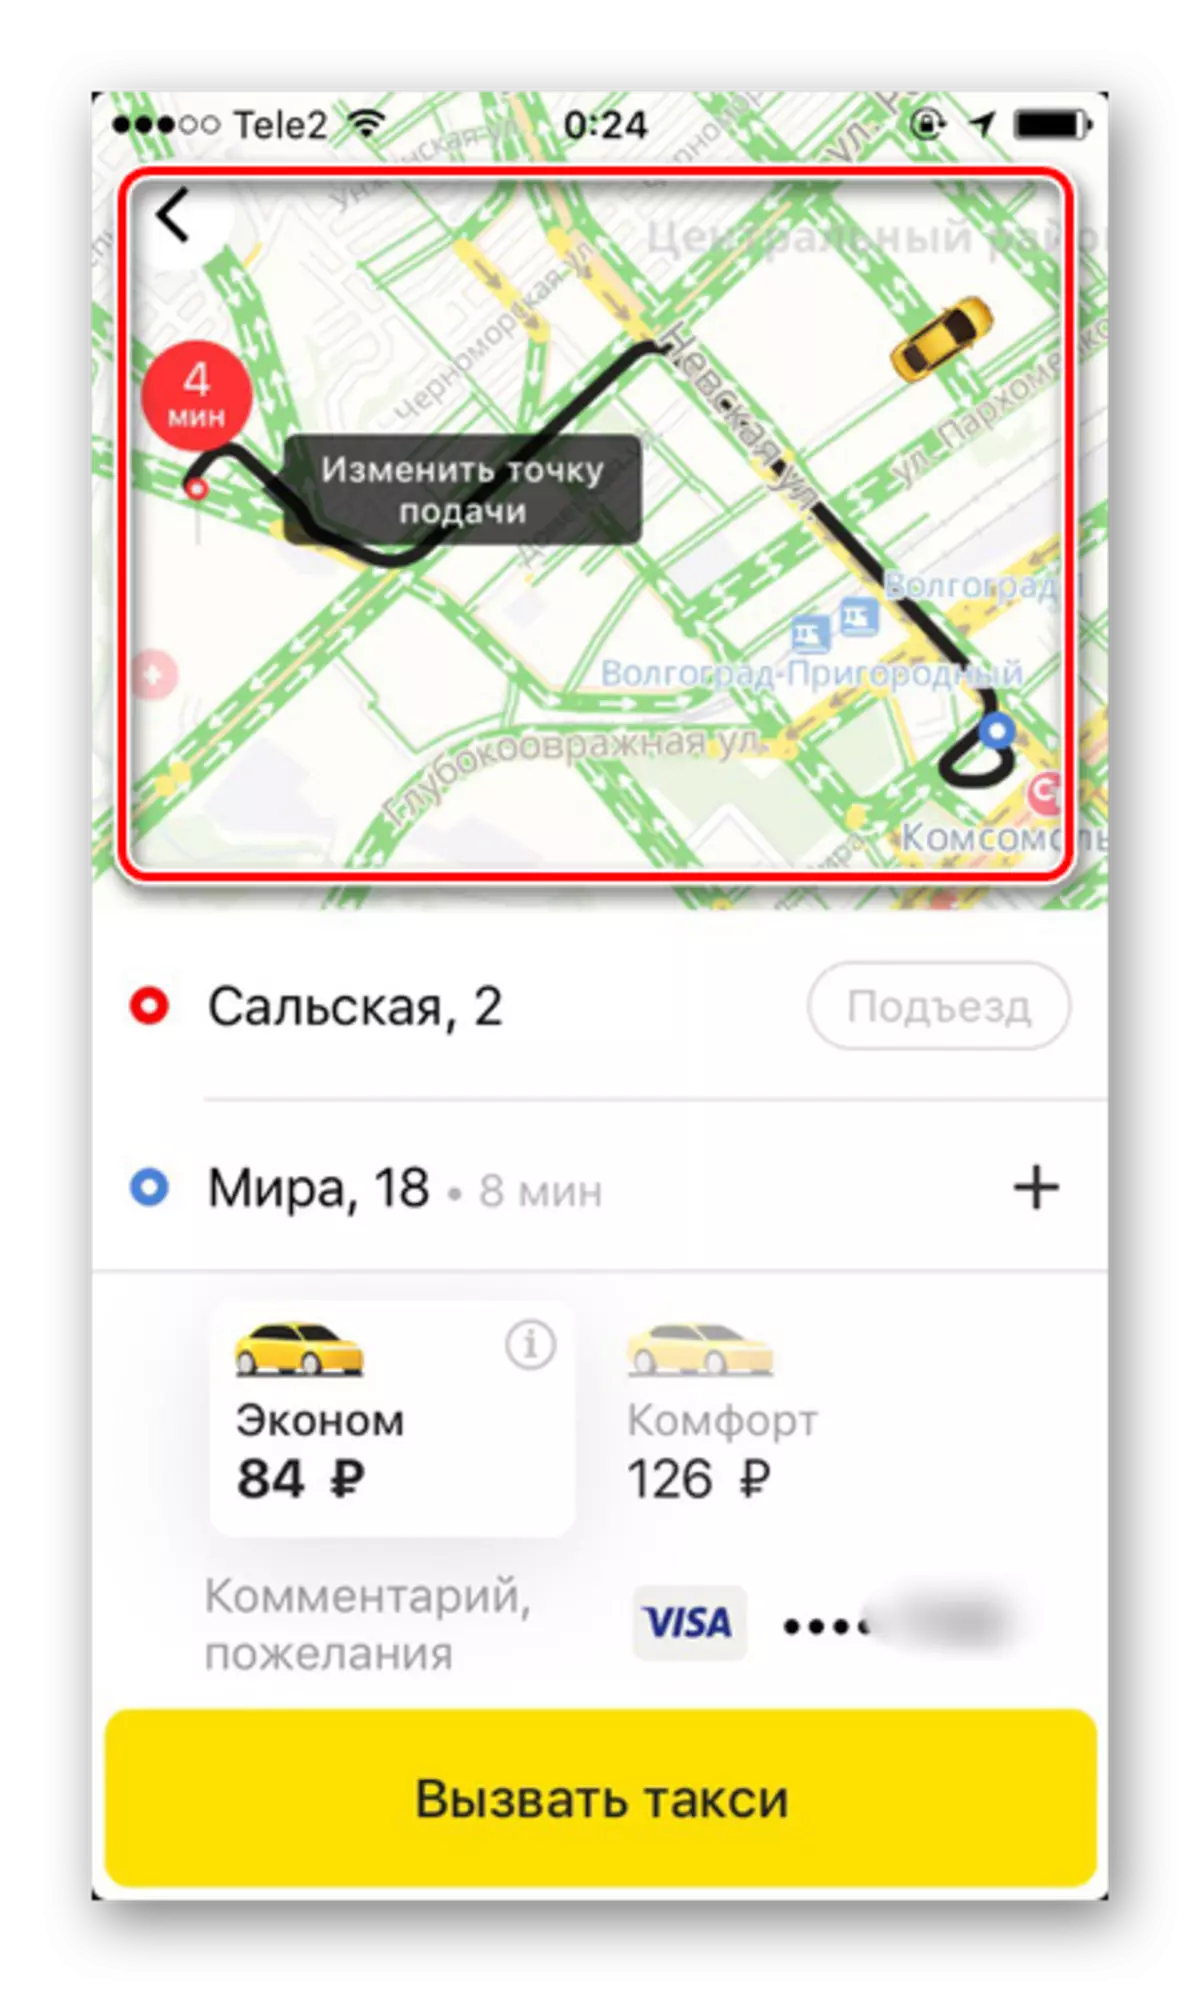 Iphone دىكى Yandex.taxi ئىلتىماسىدا